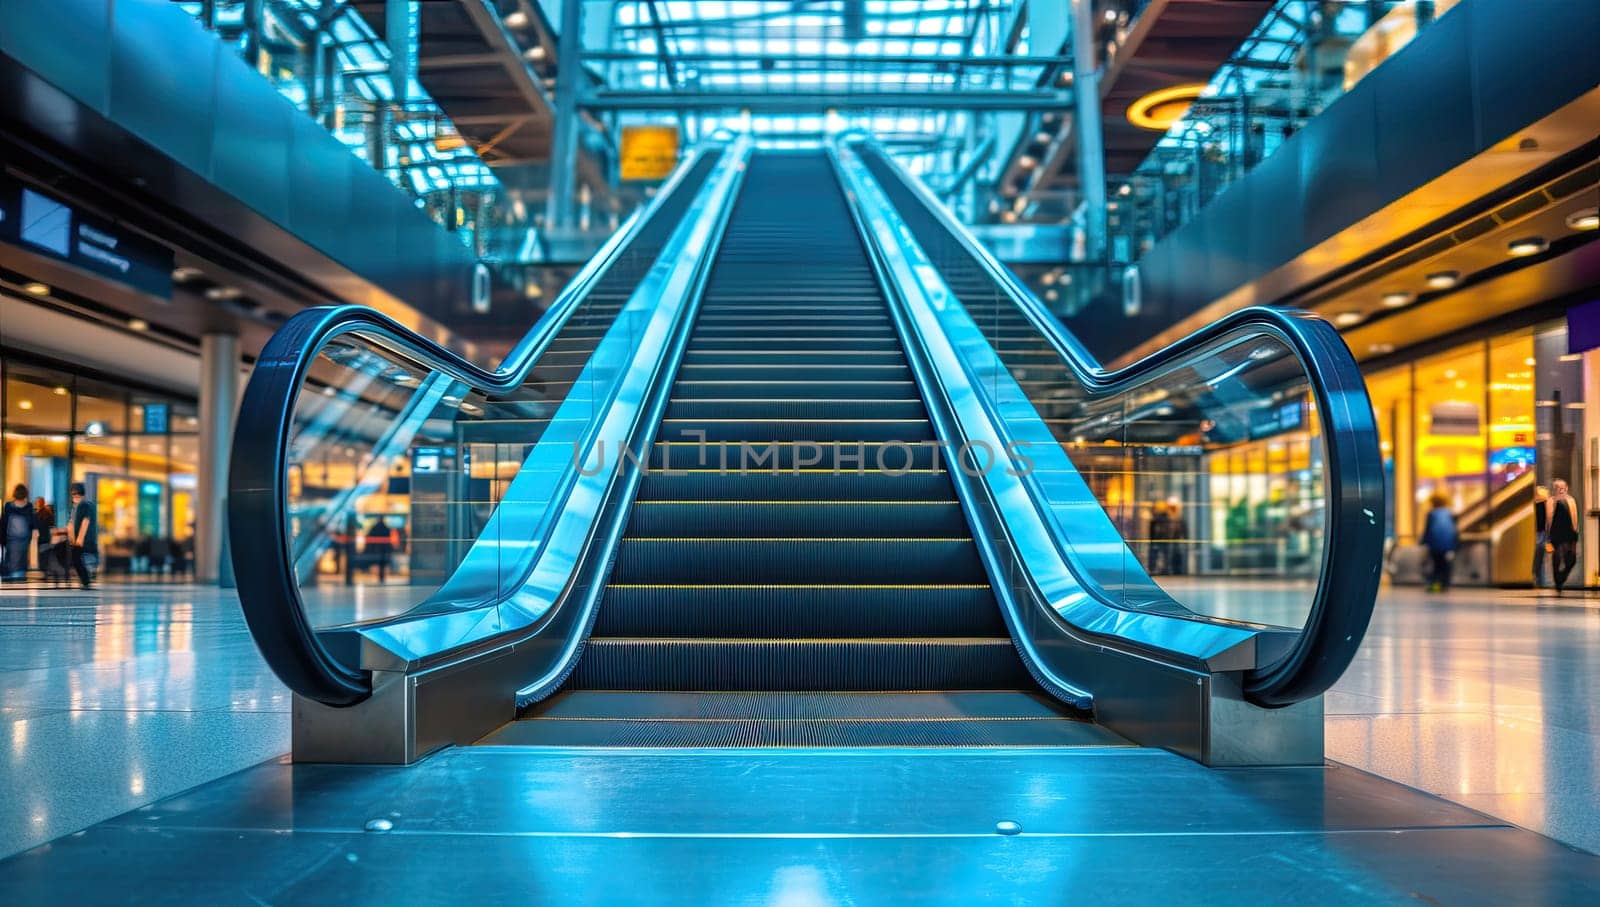 Upward escalator in modern airport terminal by ailike